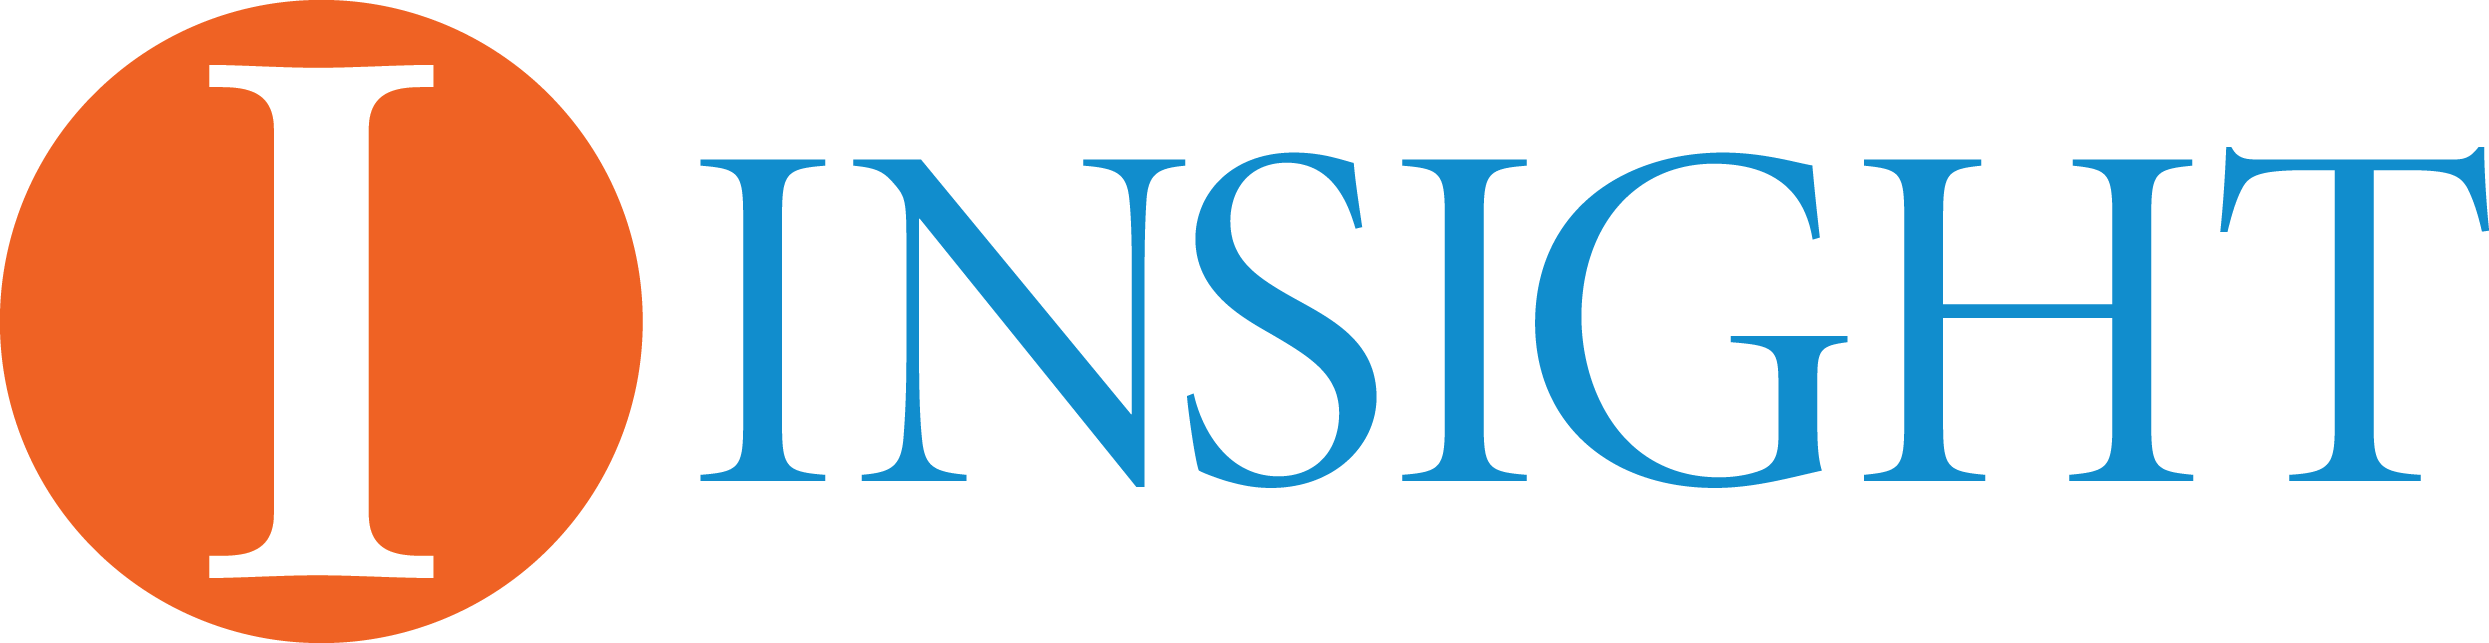 Insight Magazine logo